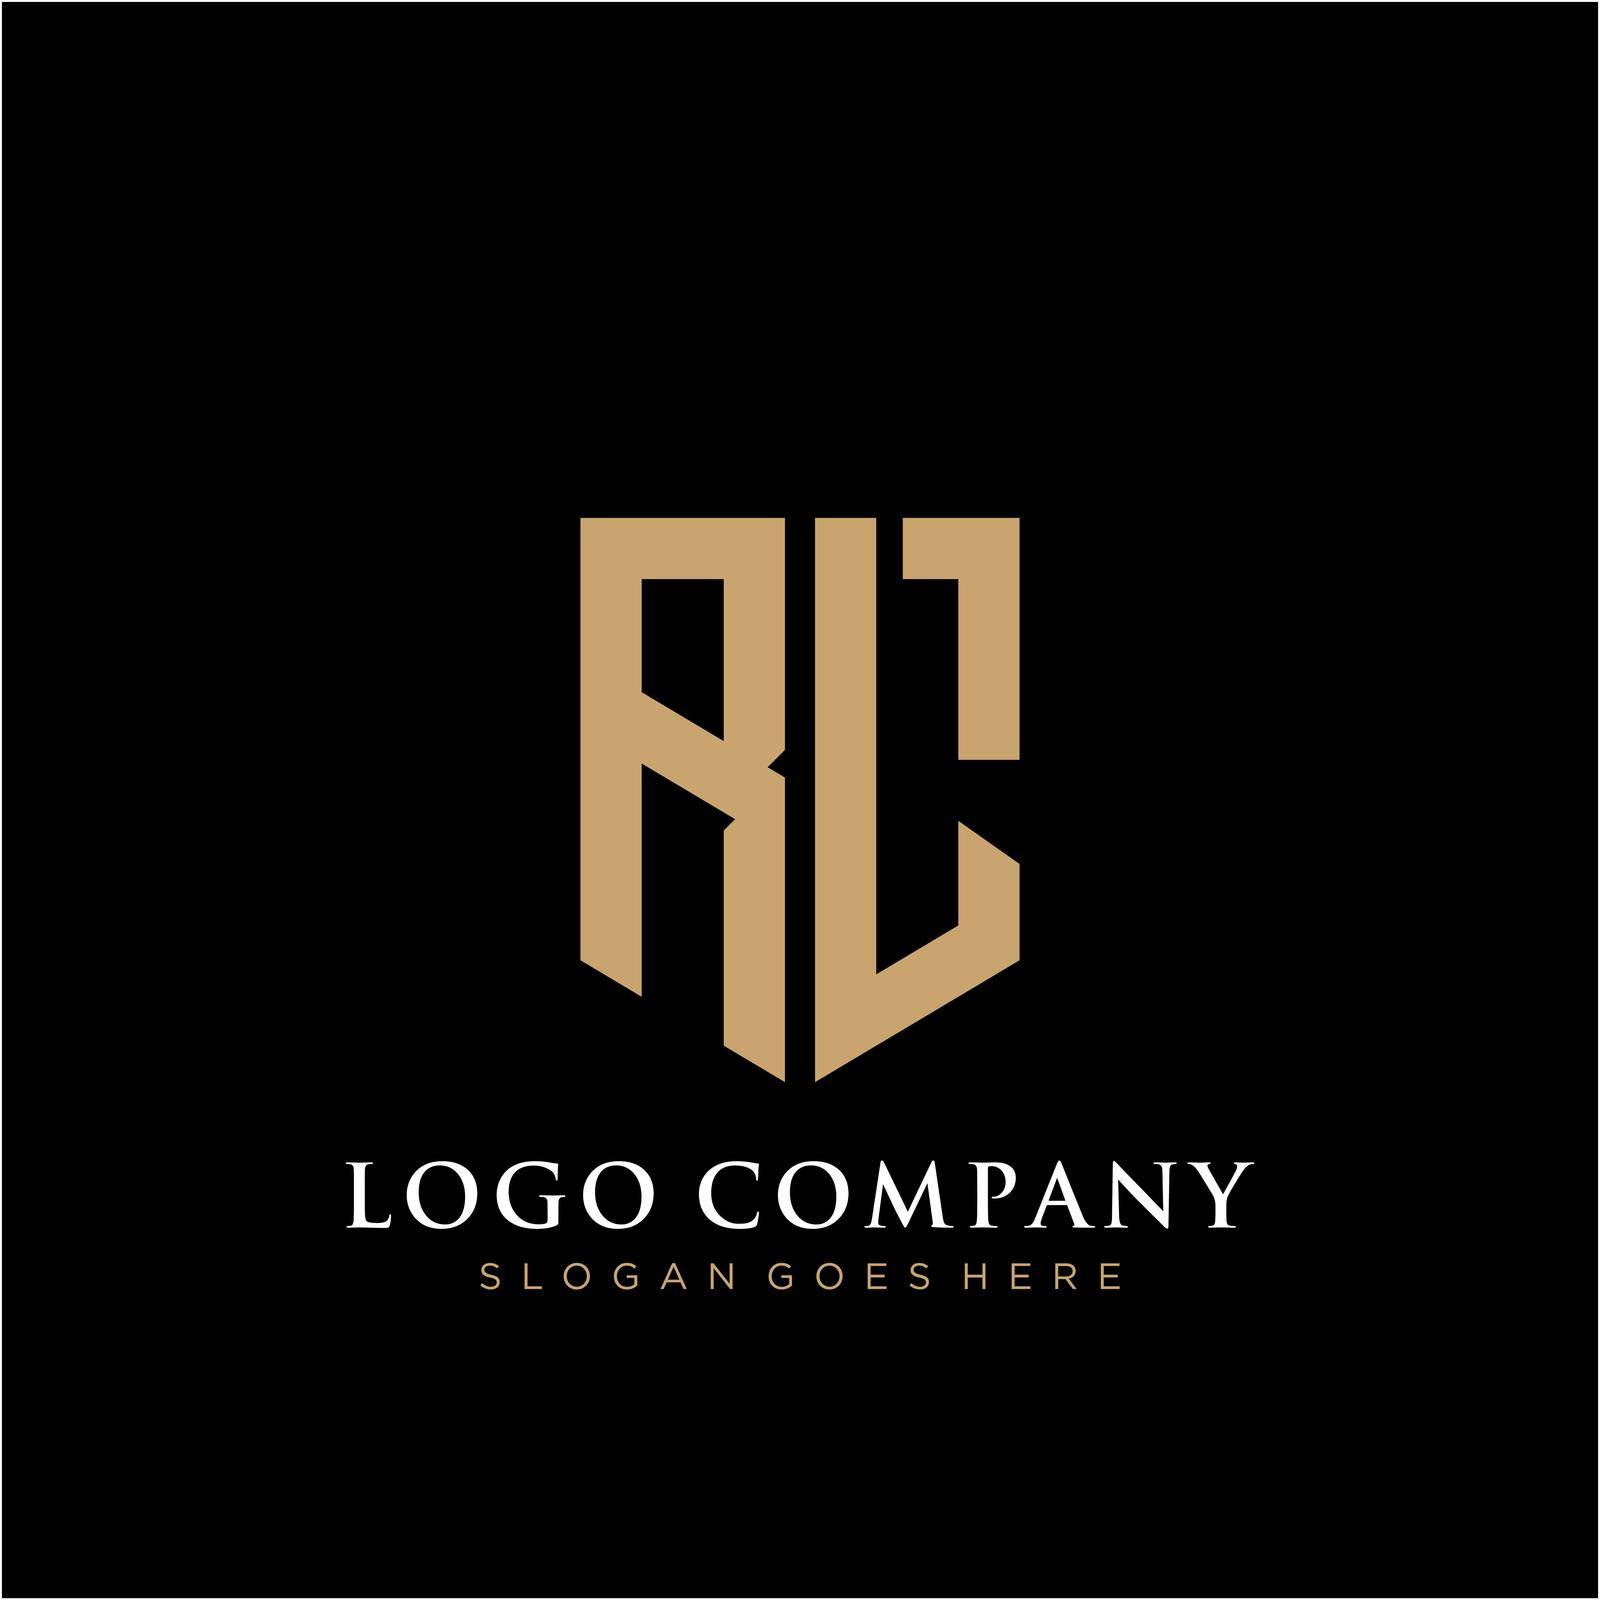 RL Letter logo icon design template elements by liaanniesatul